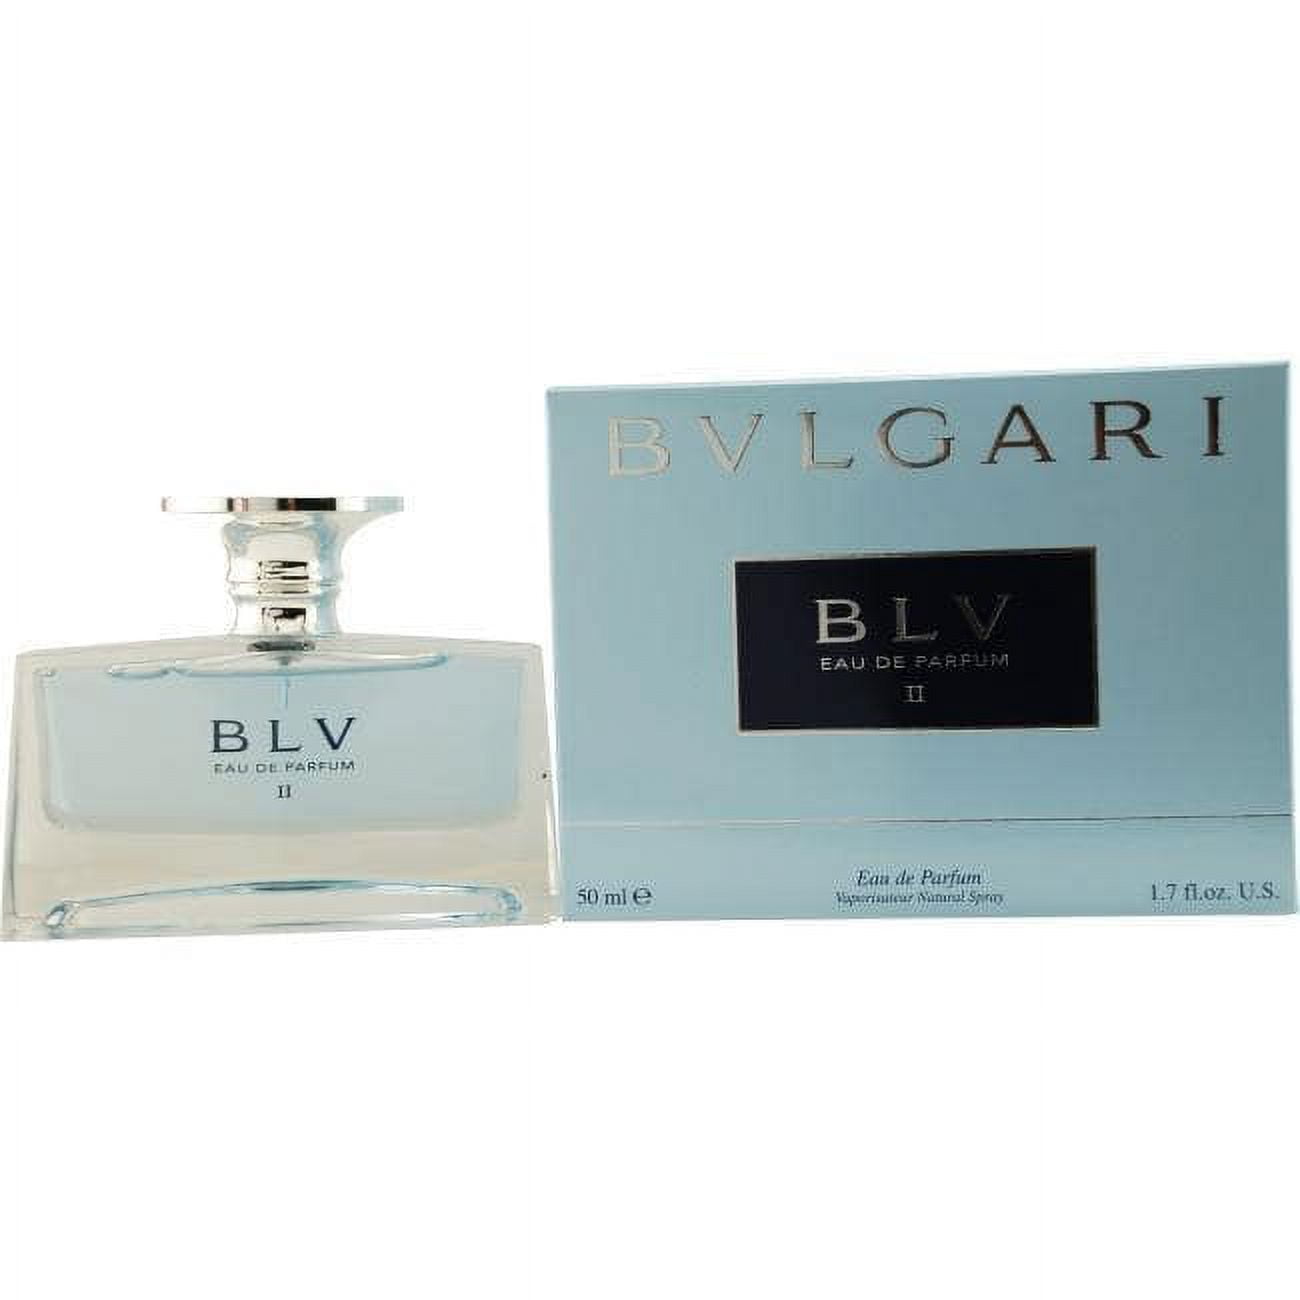 Bvlgari Blv II Eau De Parfum, Perfume for Women 1.7 oz - Walmart.com